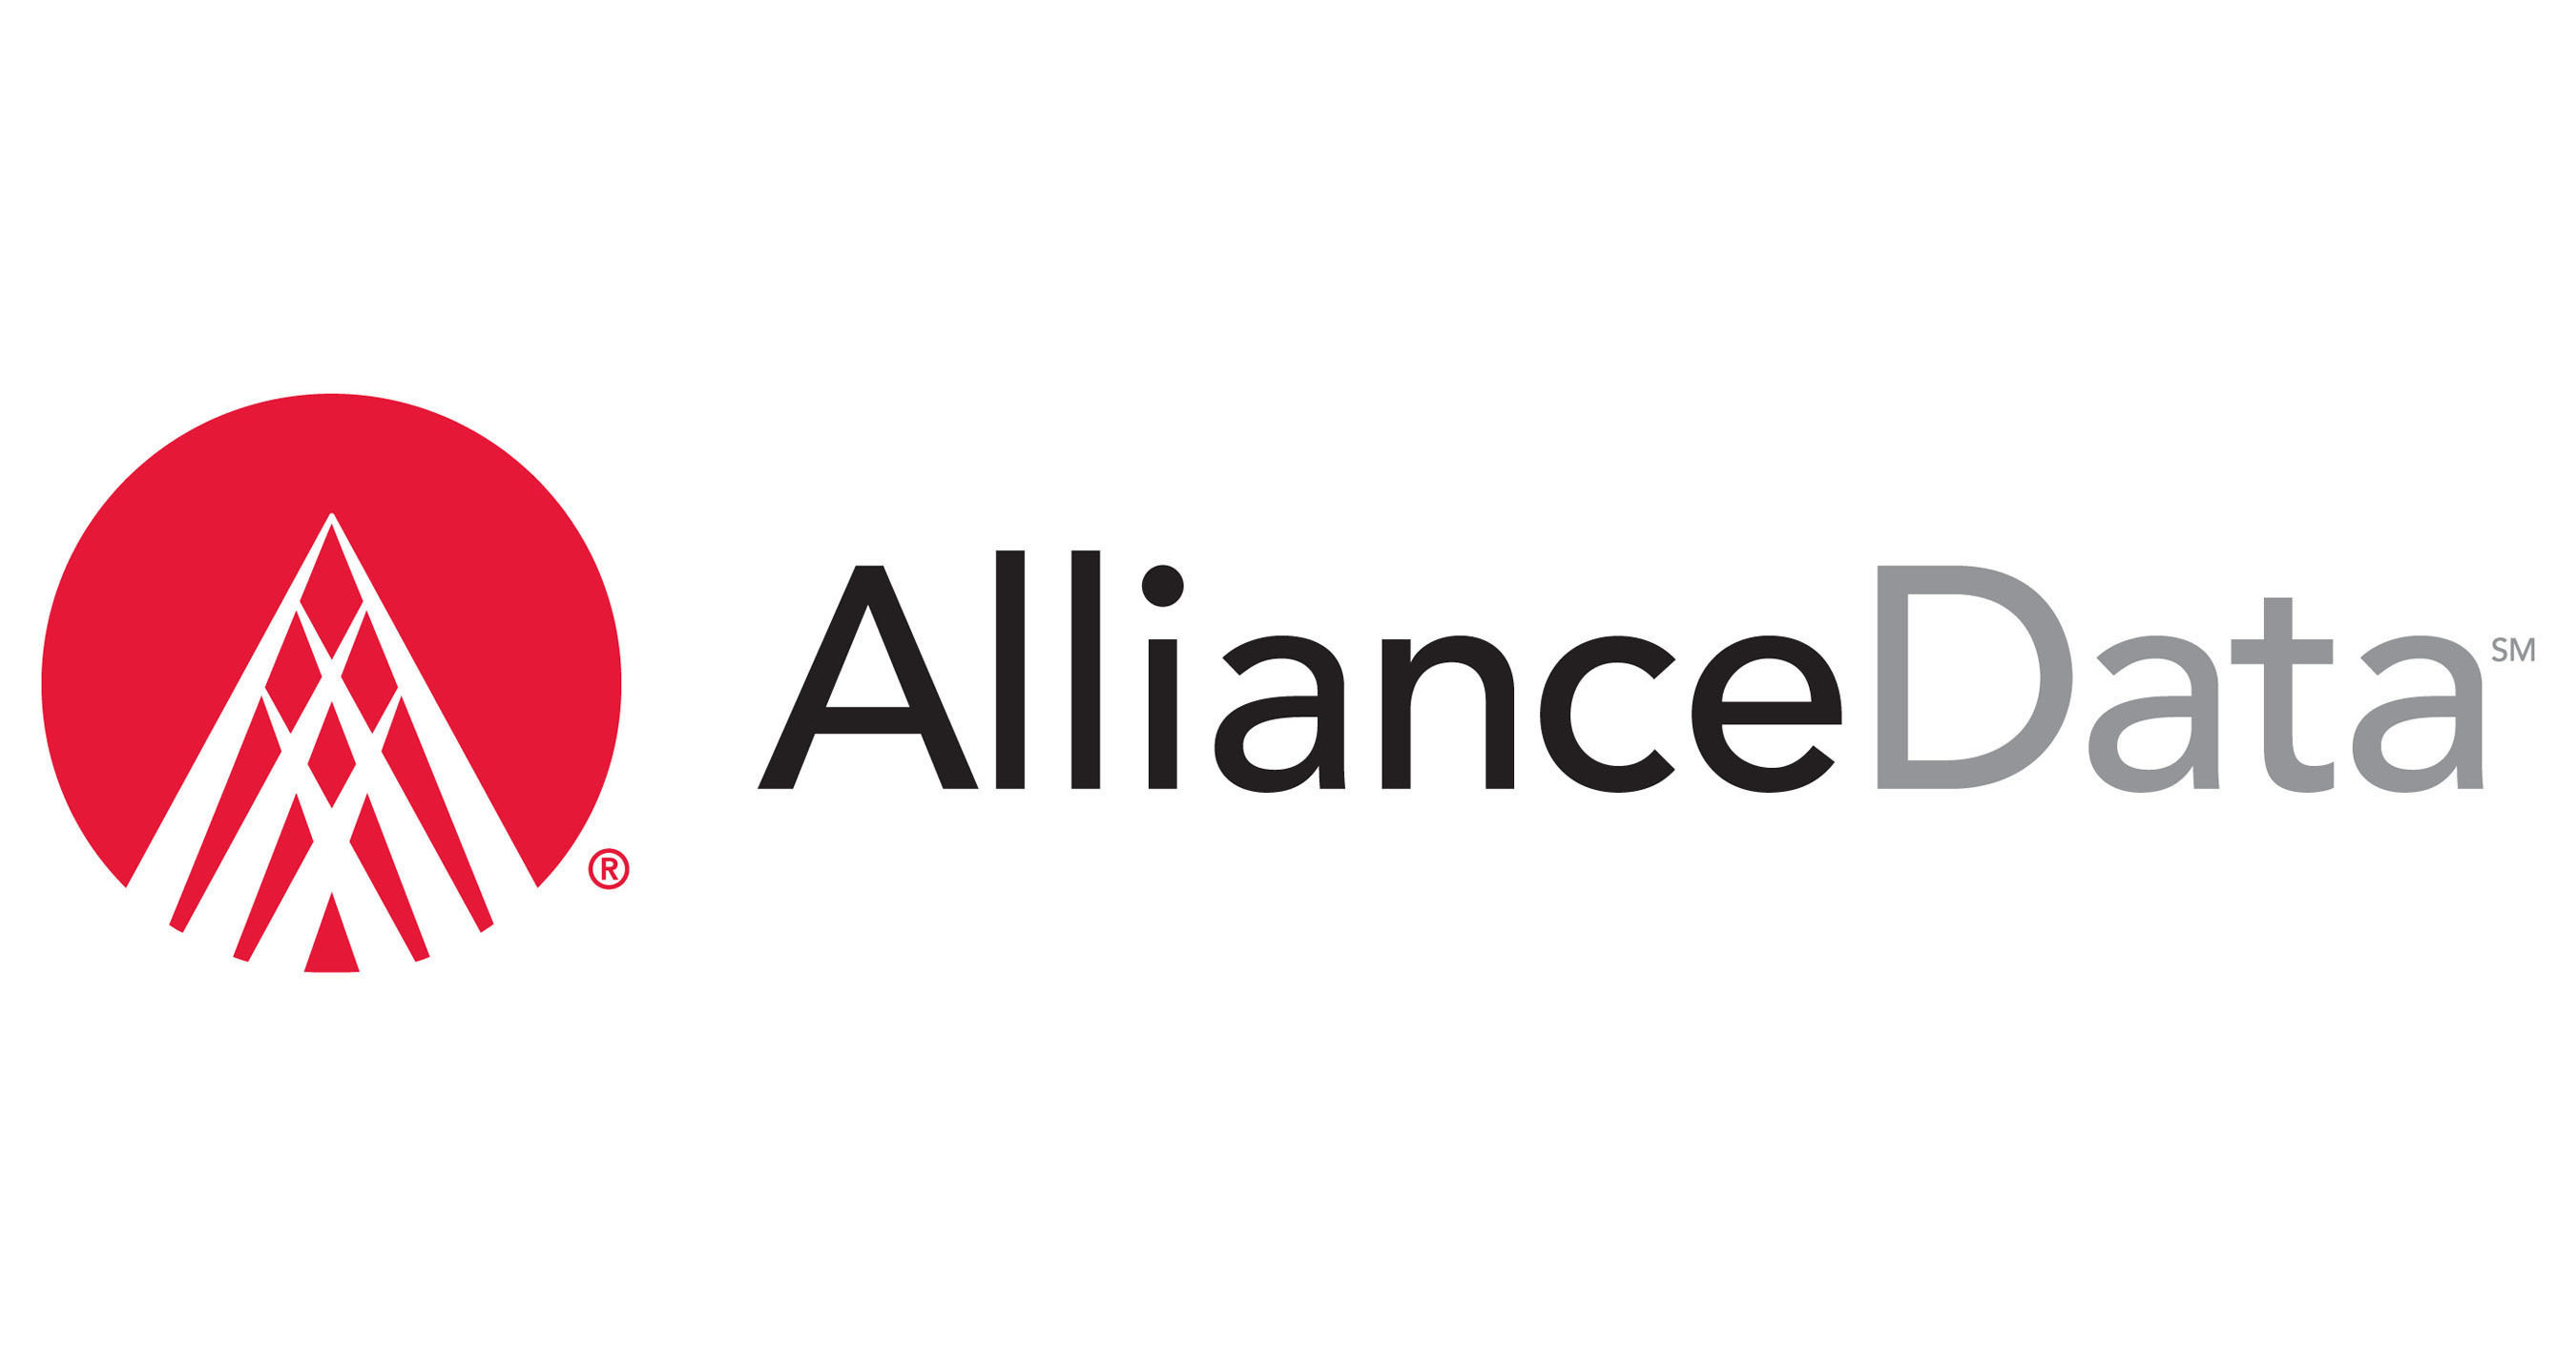 The alliance logo dota 2 фото 47